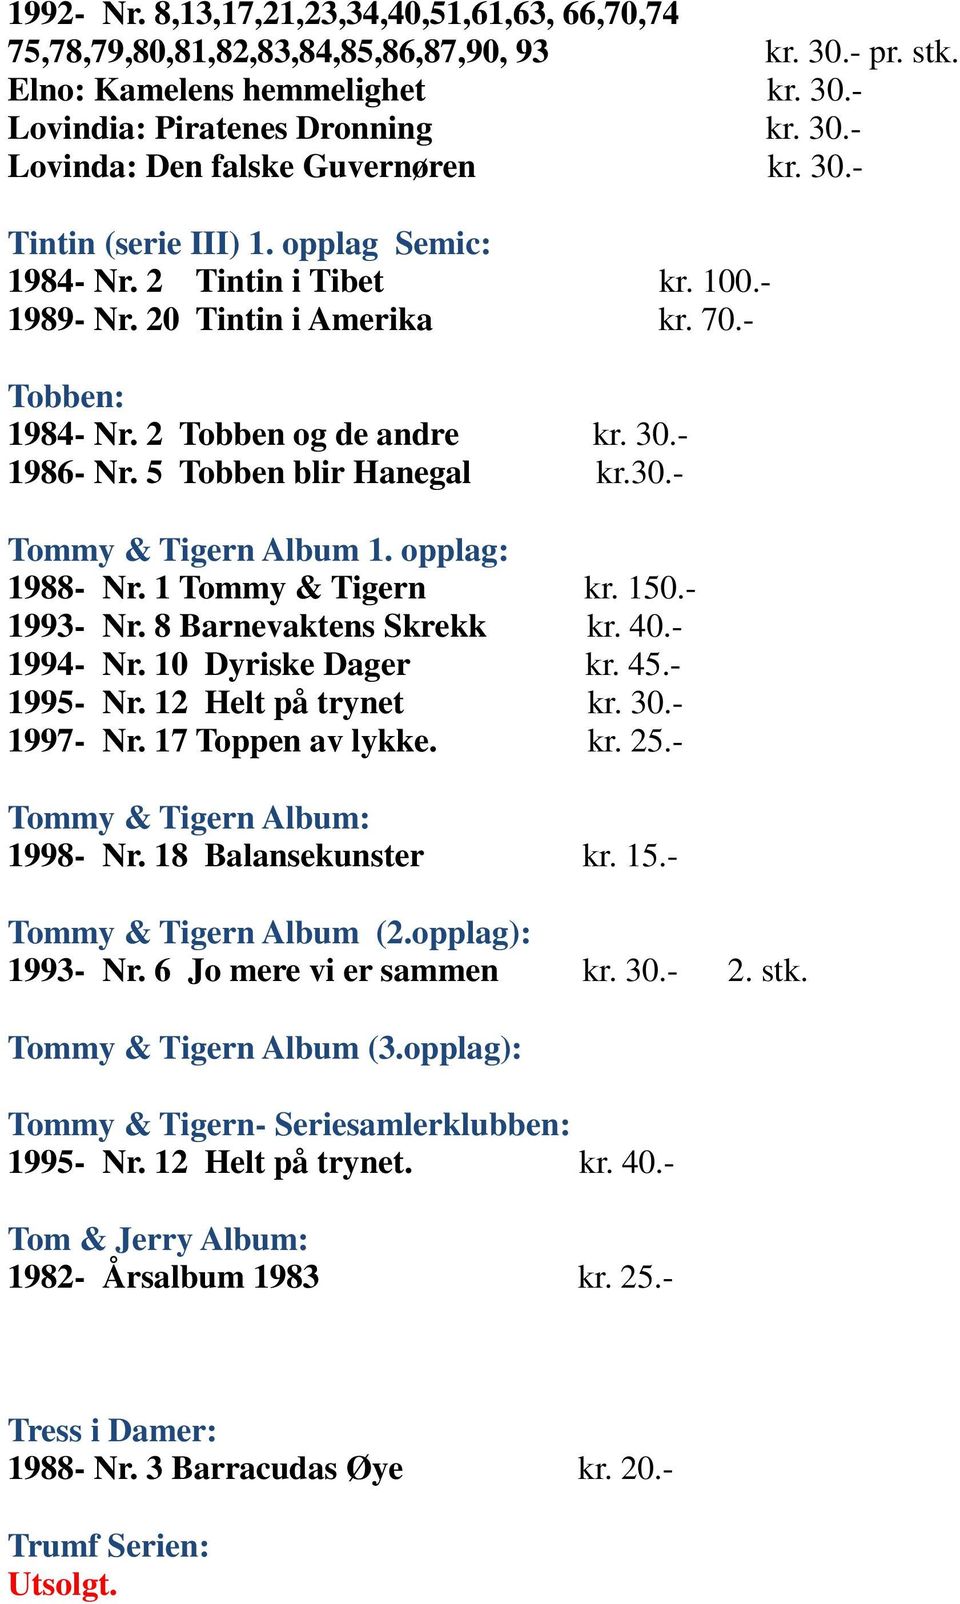 30.- Tommy & Tigern Album 1. opplag: 1988- Nr. 1 Tommy & Tigern kr. 150.- 1993- Nr. 8 Barnevaktens Skrekk kr. 40.- 1994- Nr. 10 Dyriske Dager kr. 45.- 1995- Nr. 12 Helt på trynet kr. 30.- 1997- Nr.